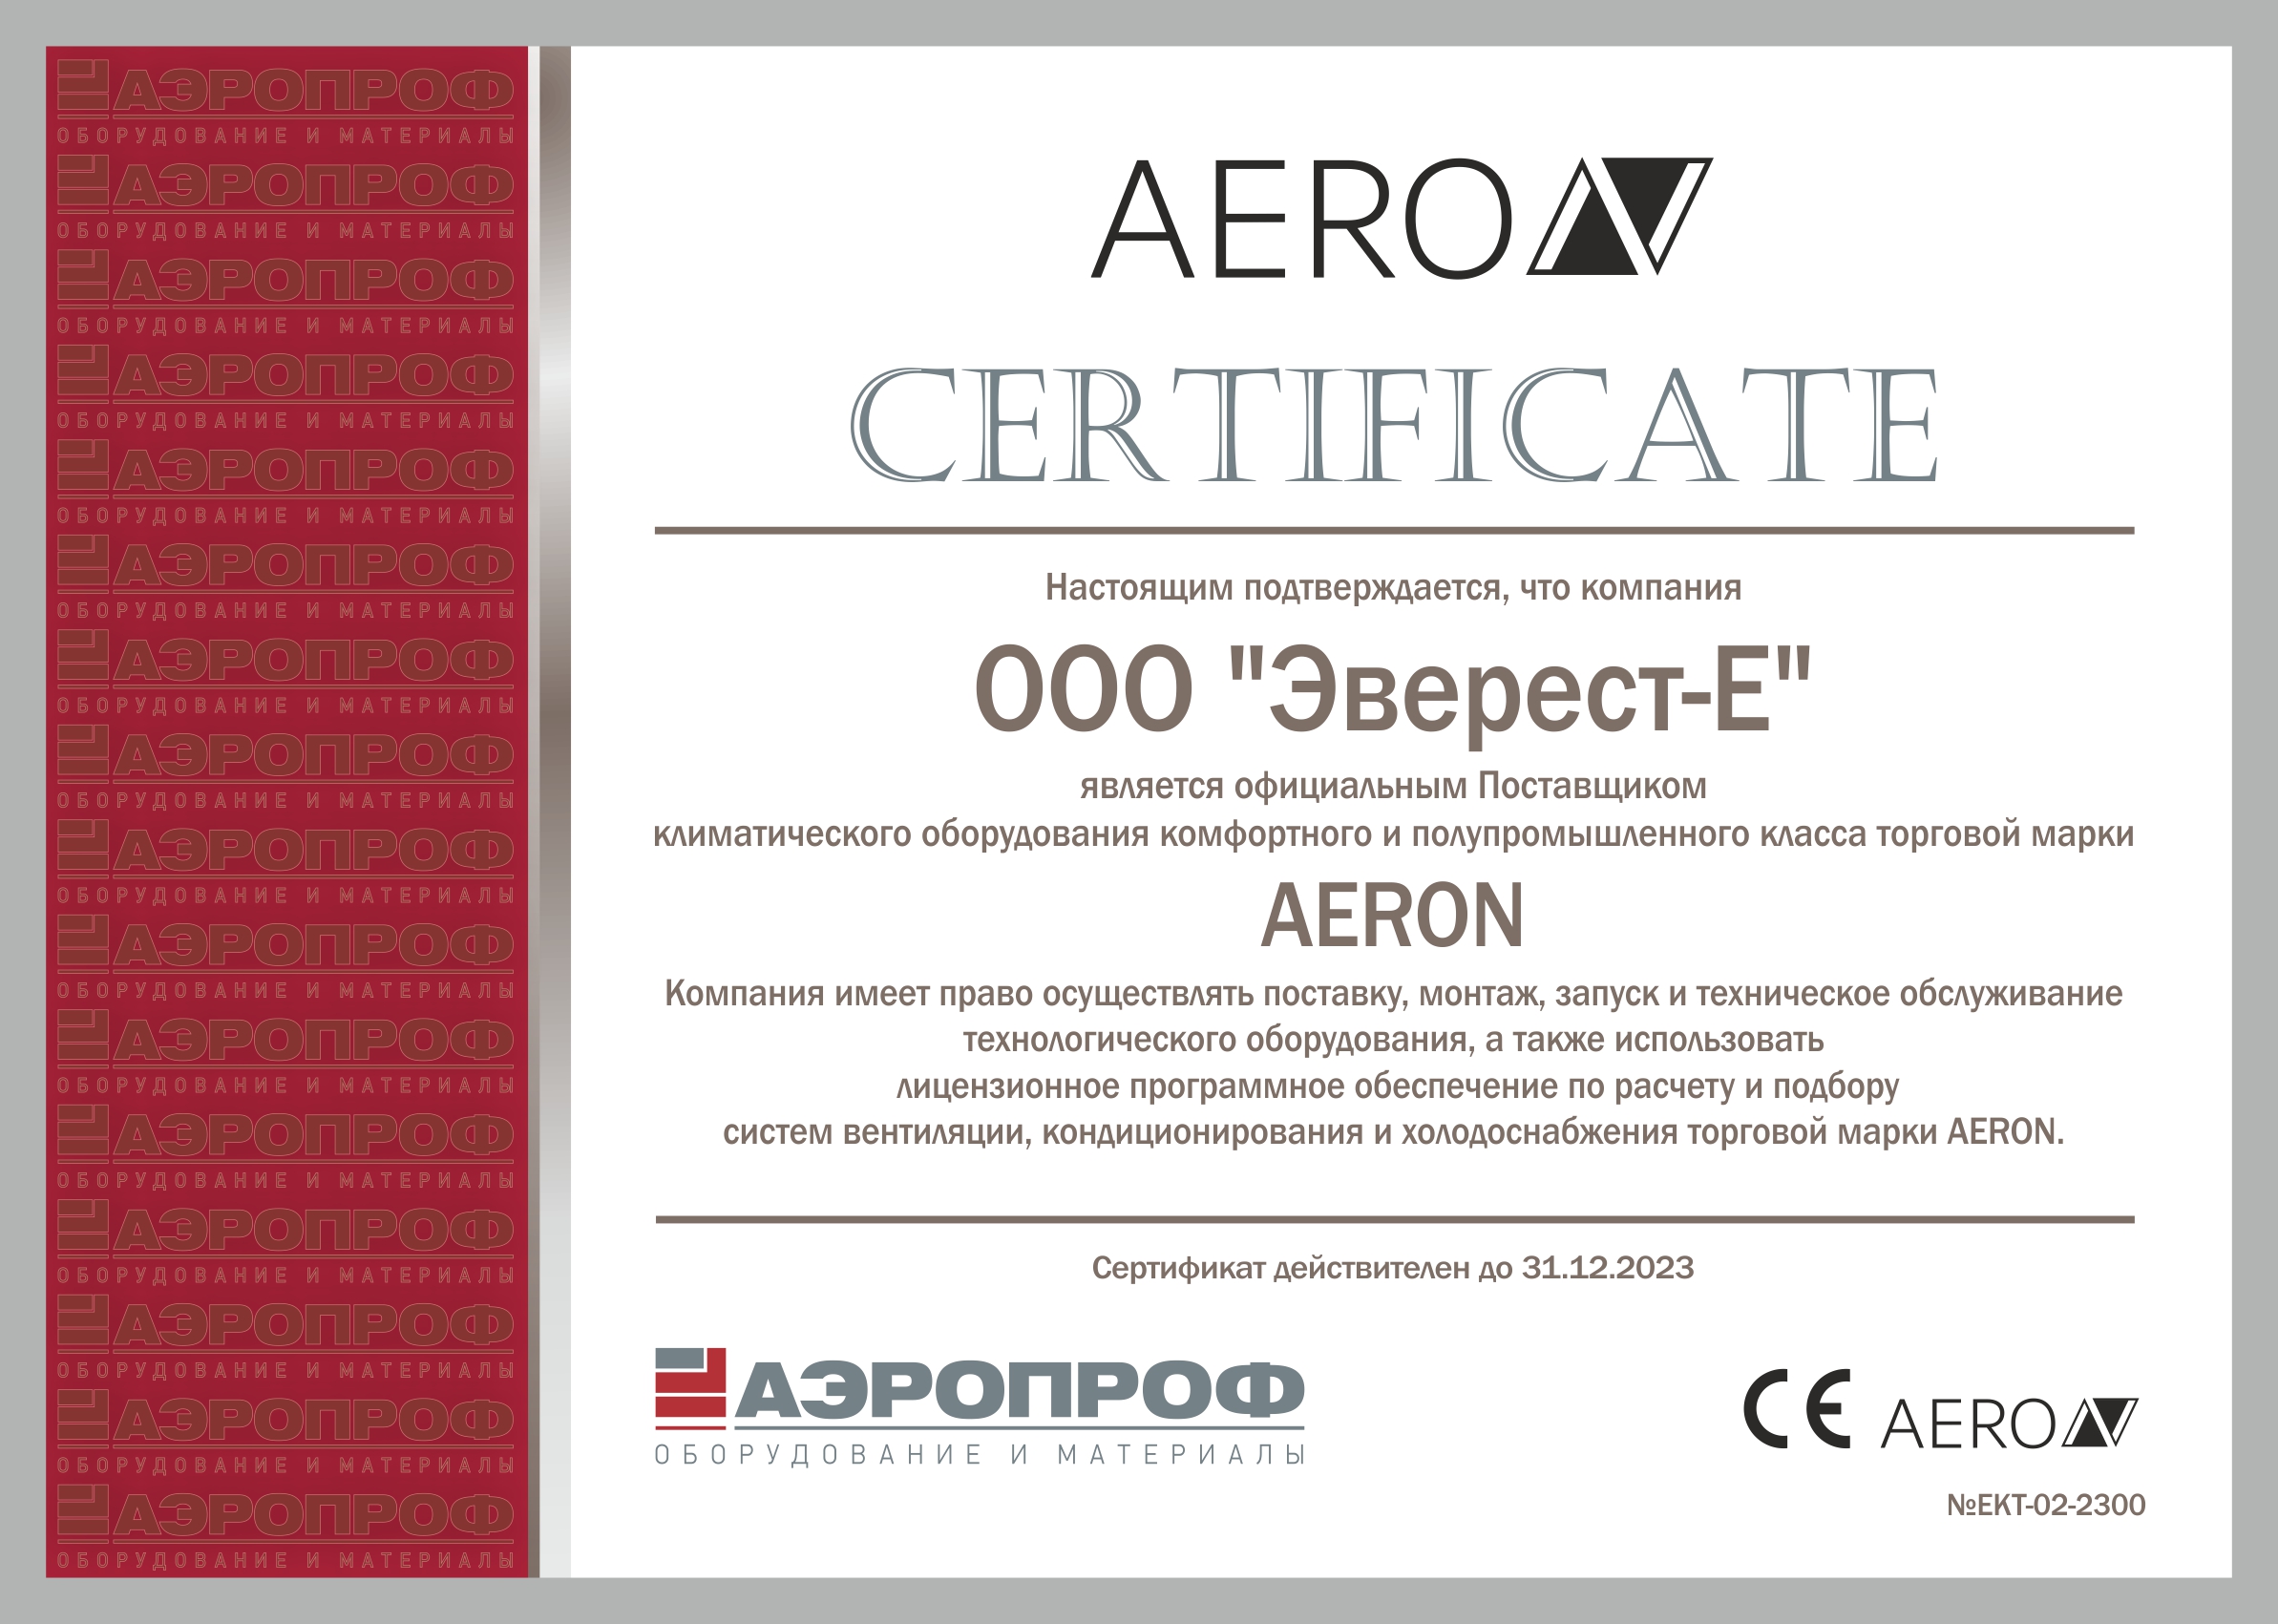 sert23-everest-aeron Kondicioner Aero ARS-II-12IHN21D6-01/ARS-II-12OHN21D6-01 kypit v Ekaterinbyrge v internet-magazine KlimatMarket96.ry Сертификат официального дилера